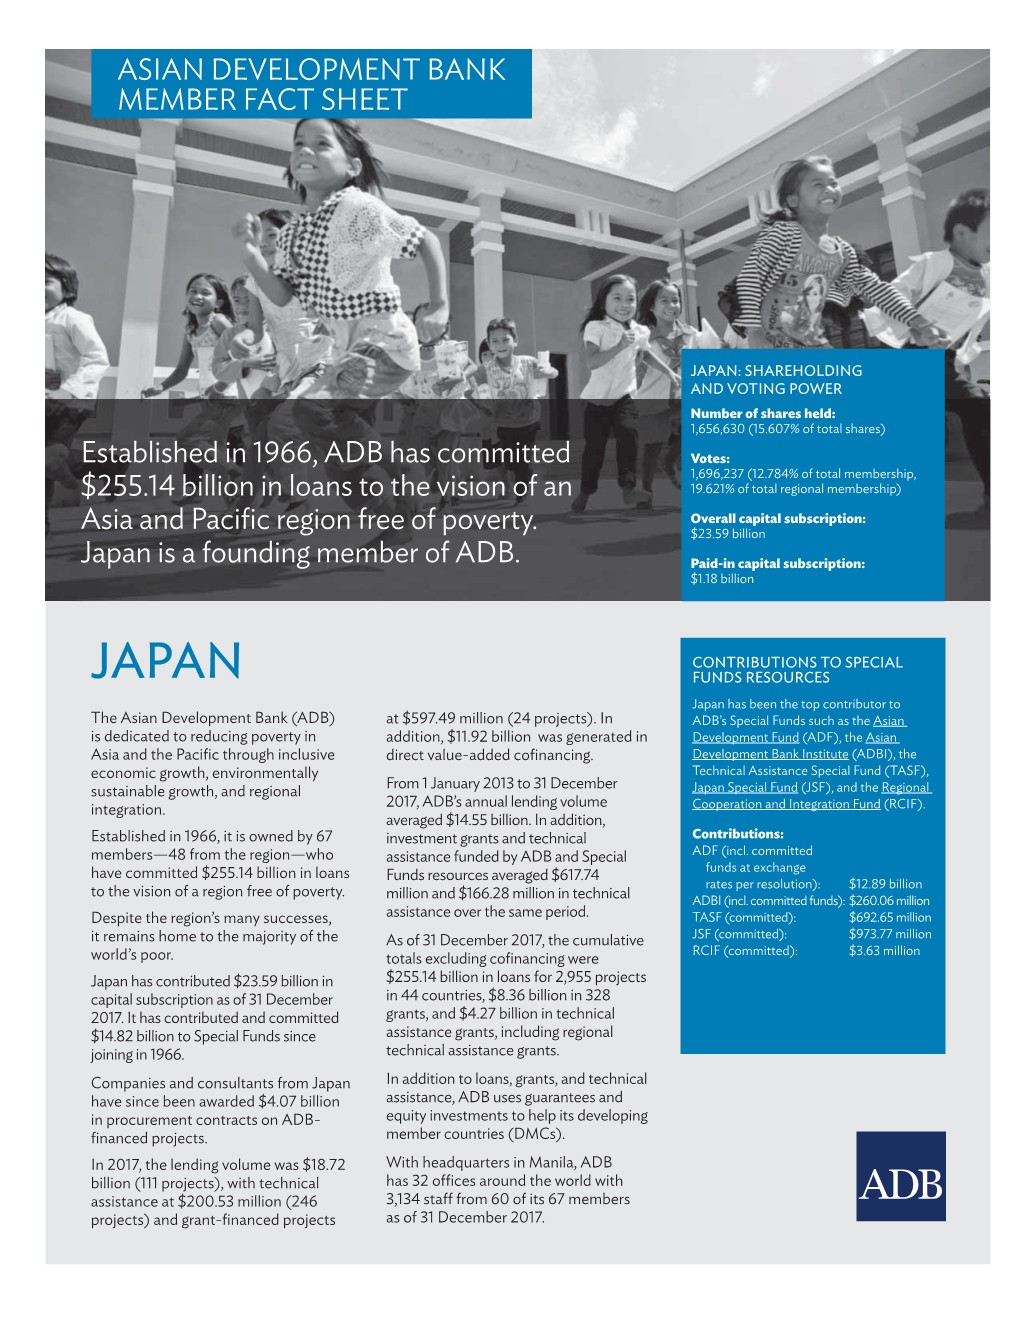 Asian Development Bank and Japan